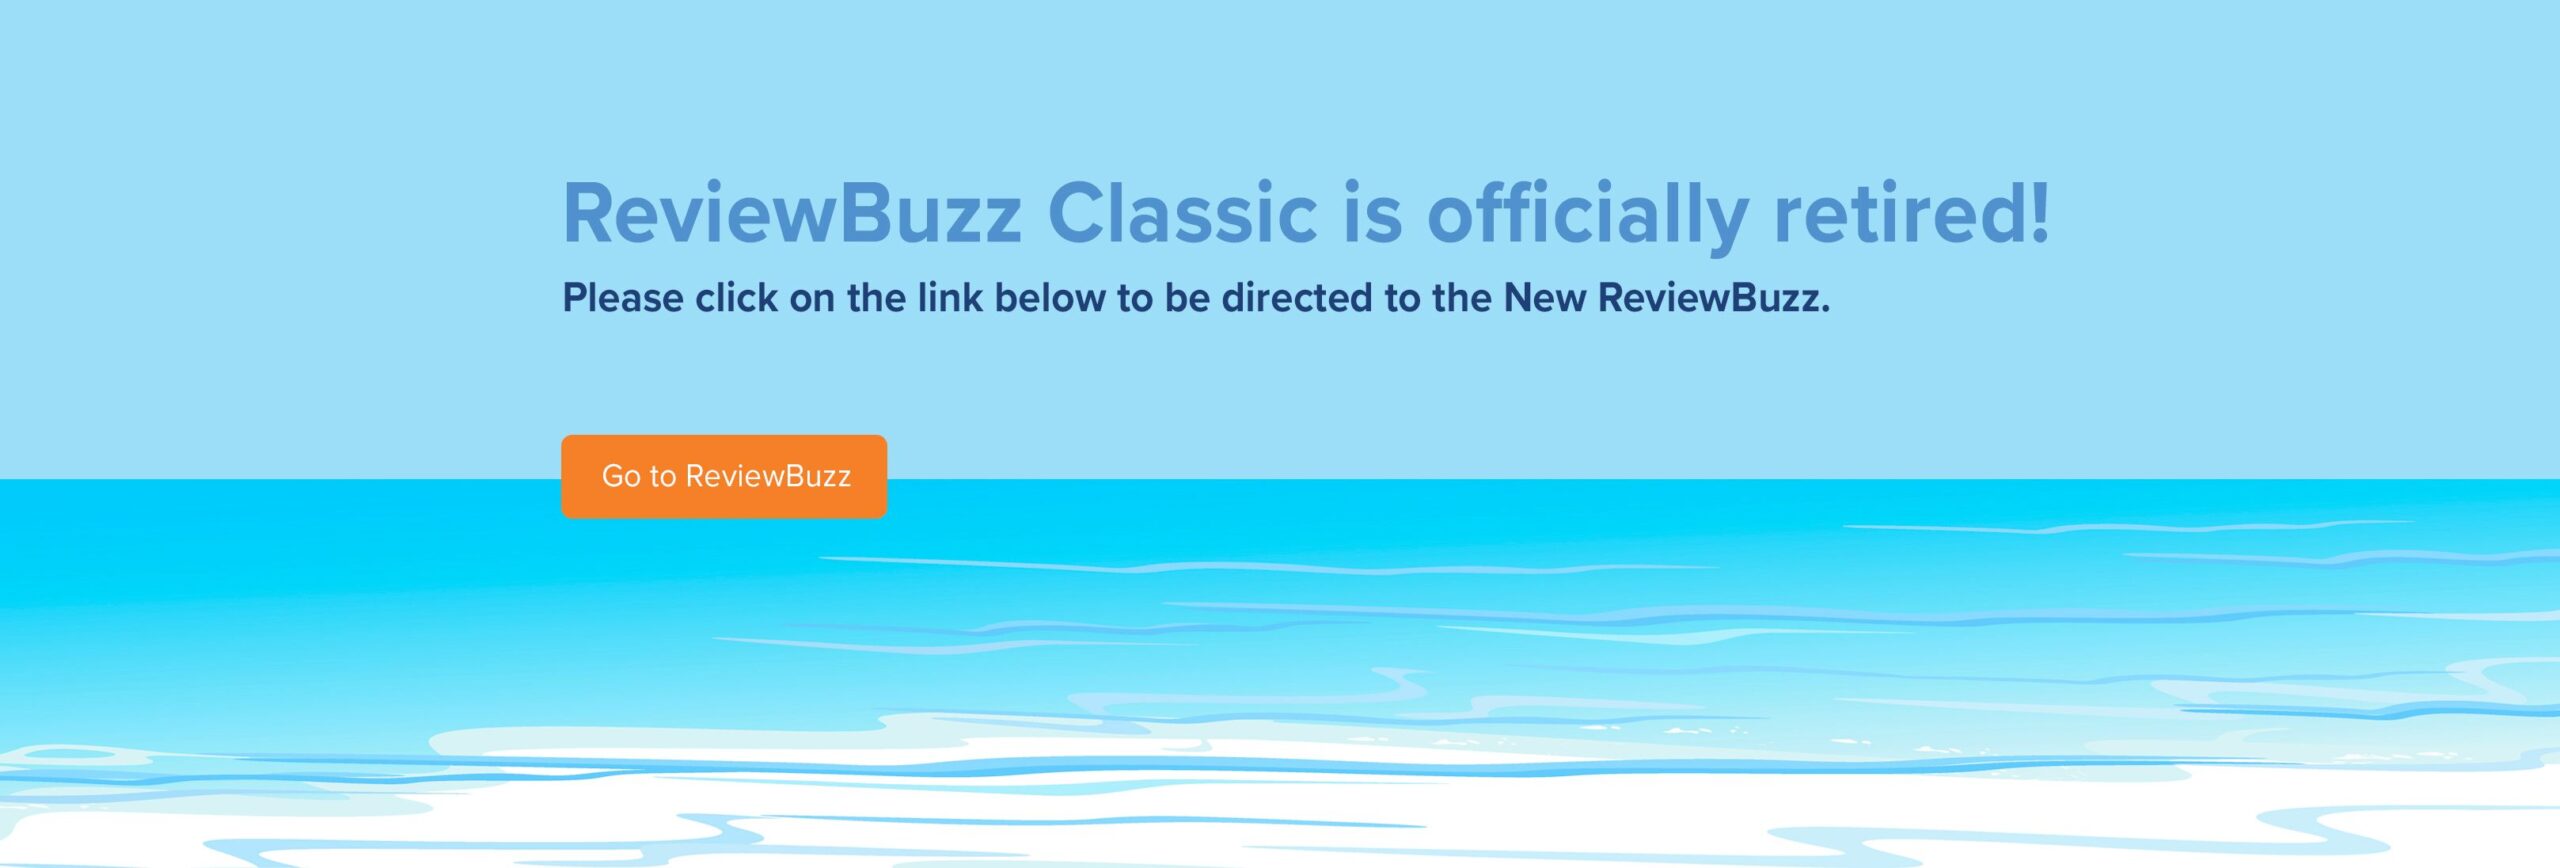 Reviewbuzz Classic Retired